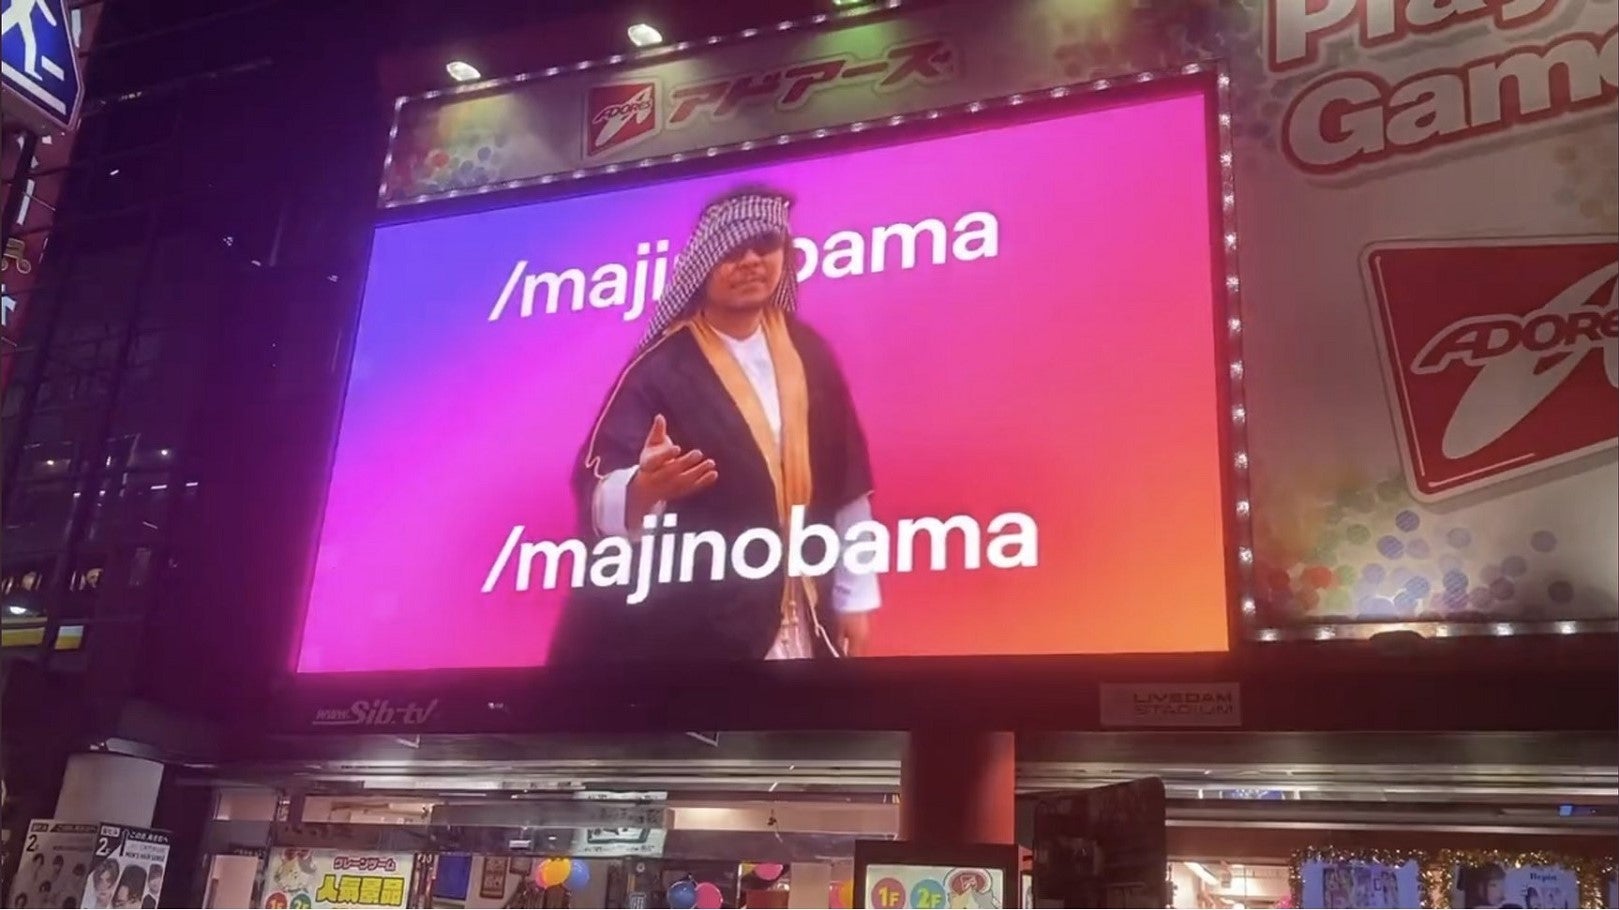 Battling video game streamer and participant Majin Obama lights up Shibuya Crossing in billboard advertisements